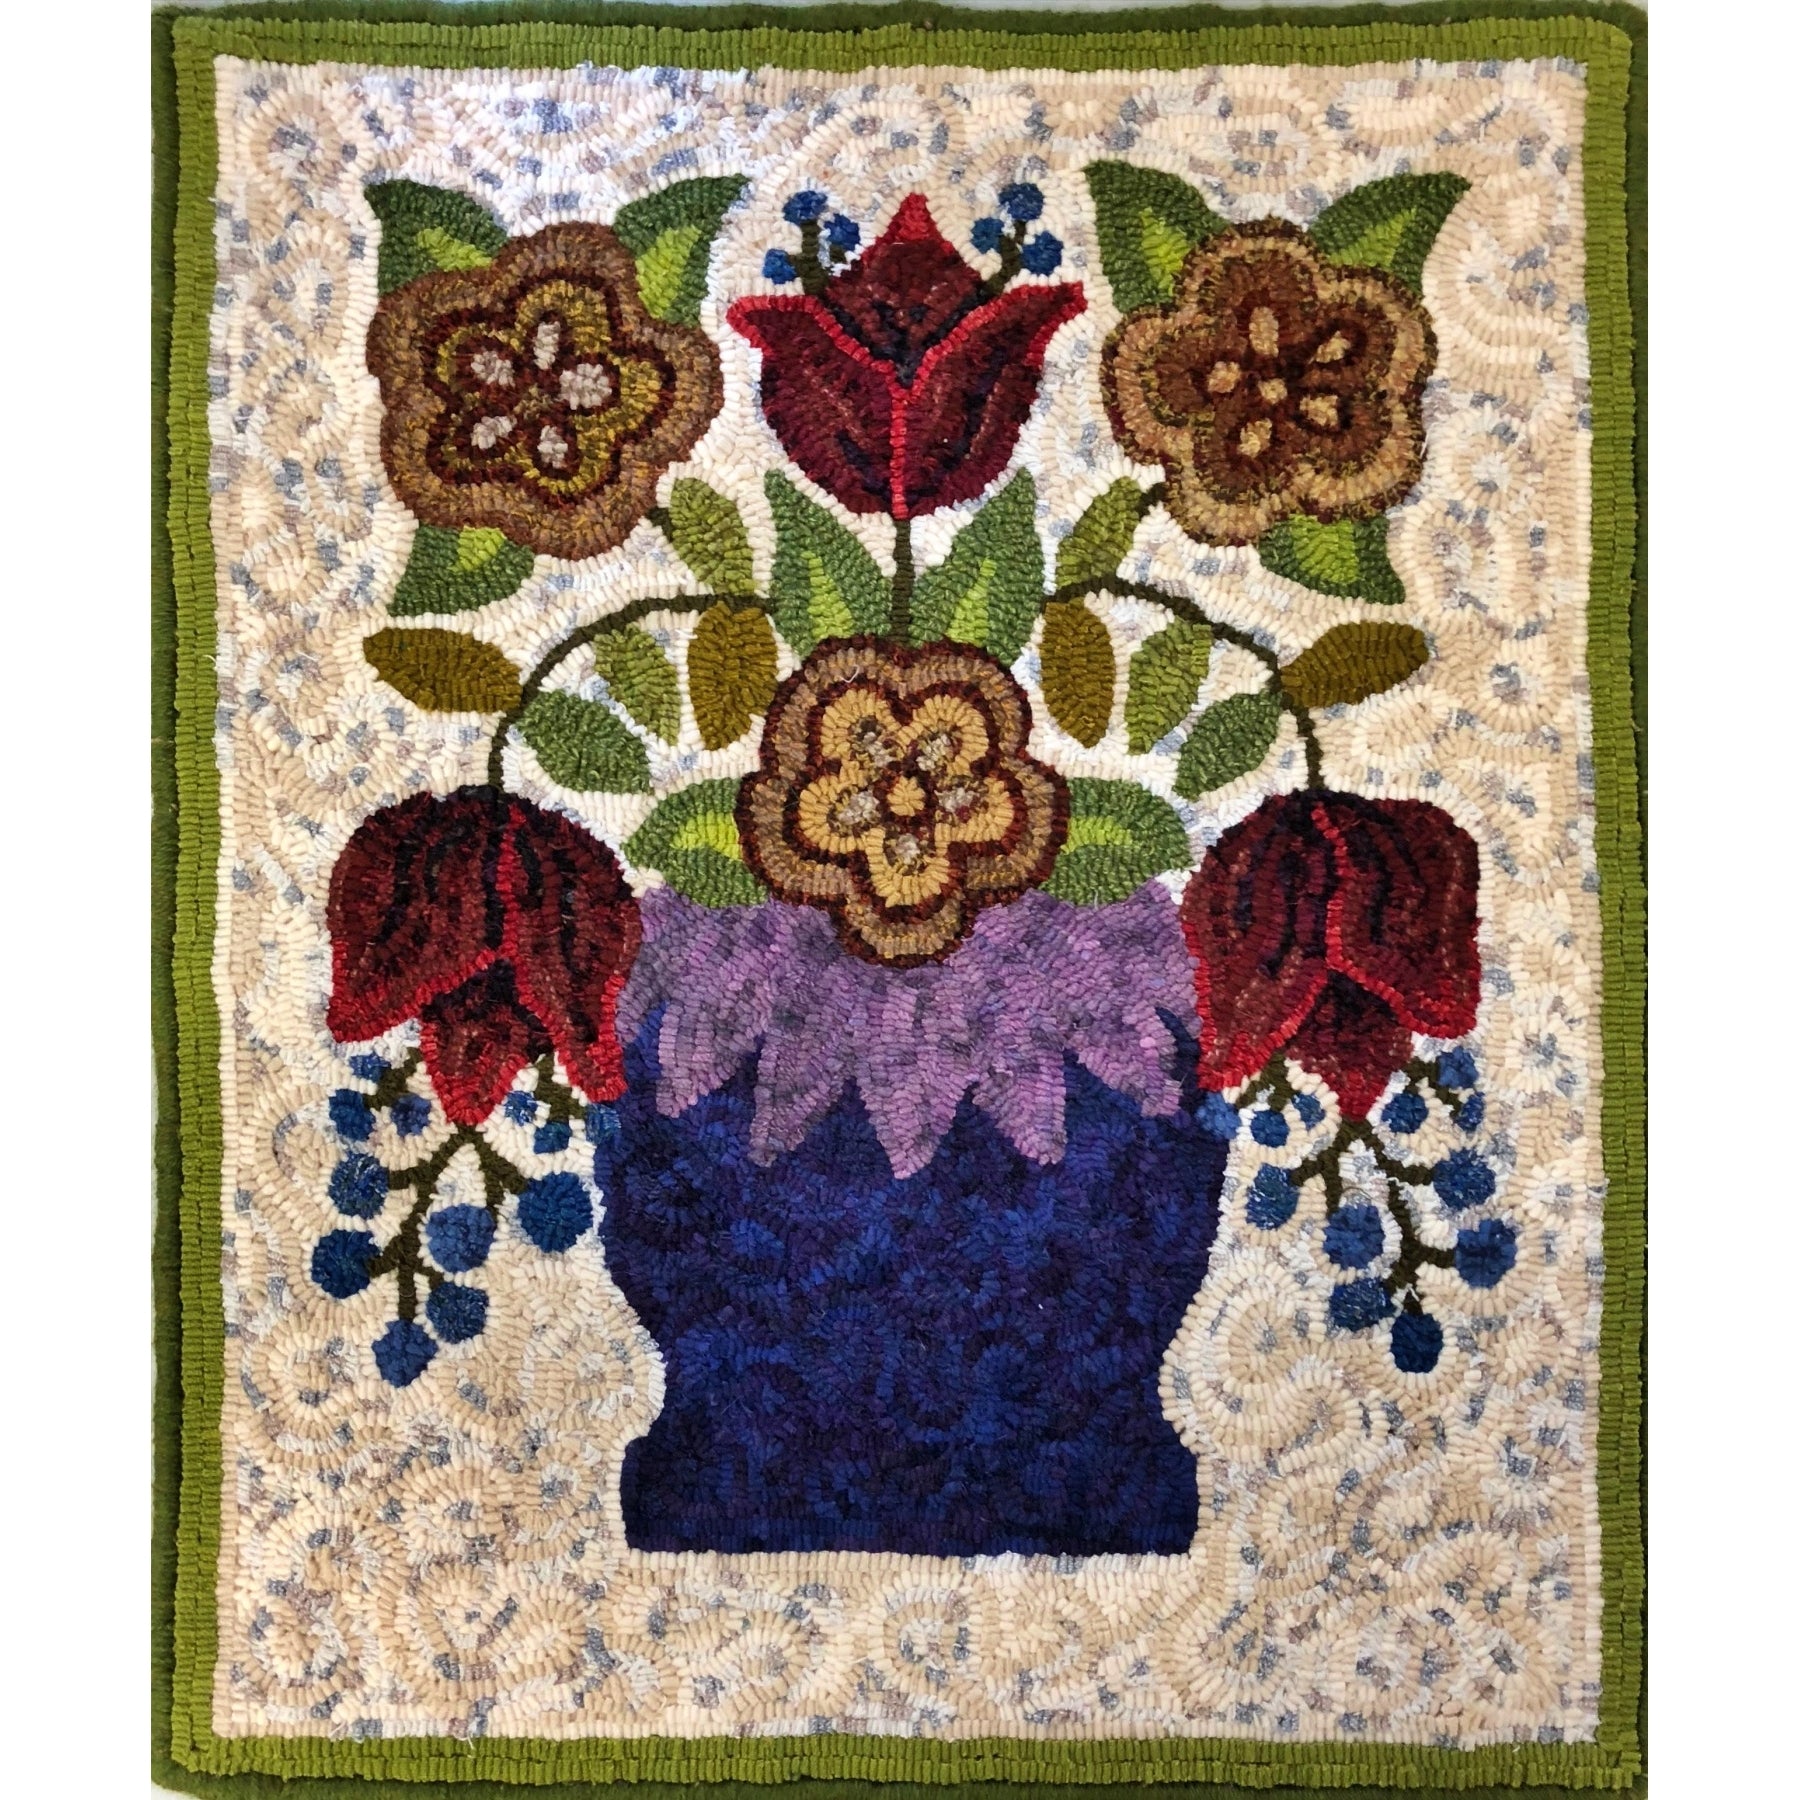 Attic Treasures, rug hooked by Karen Cormier